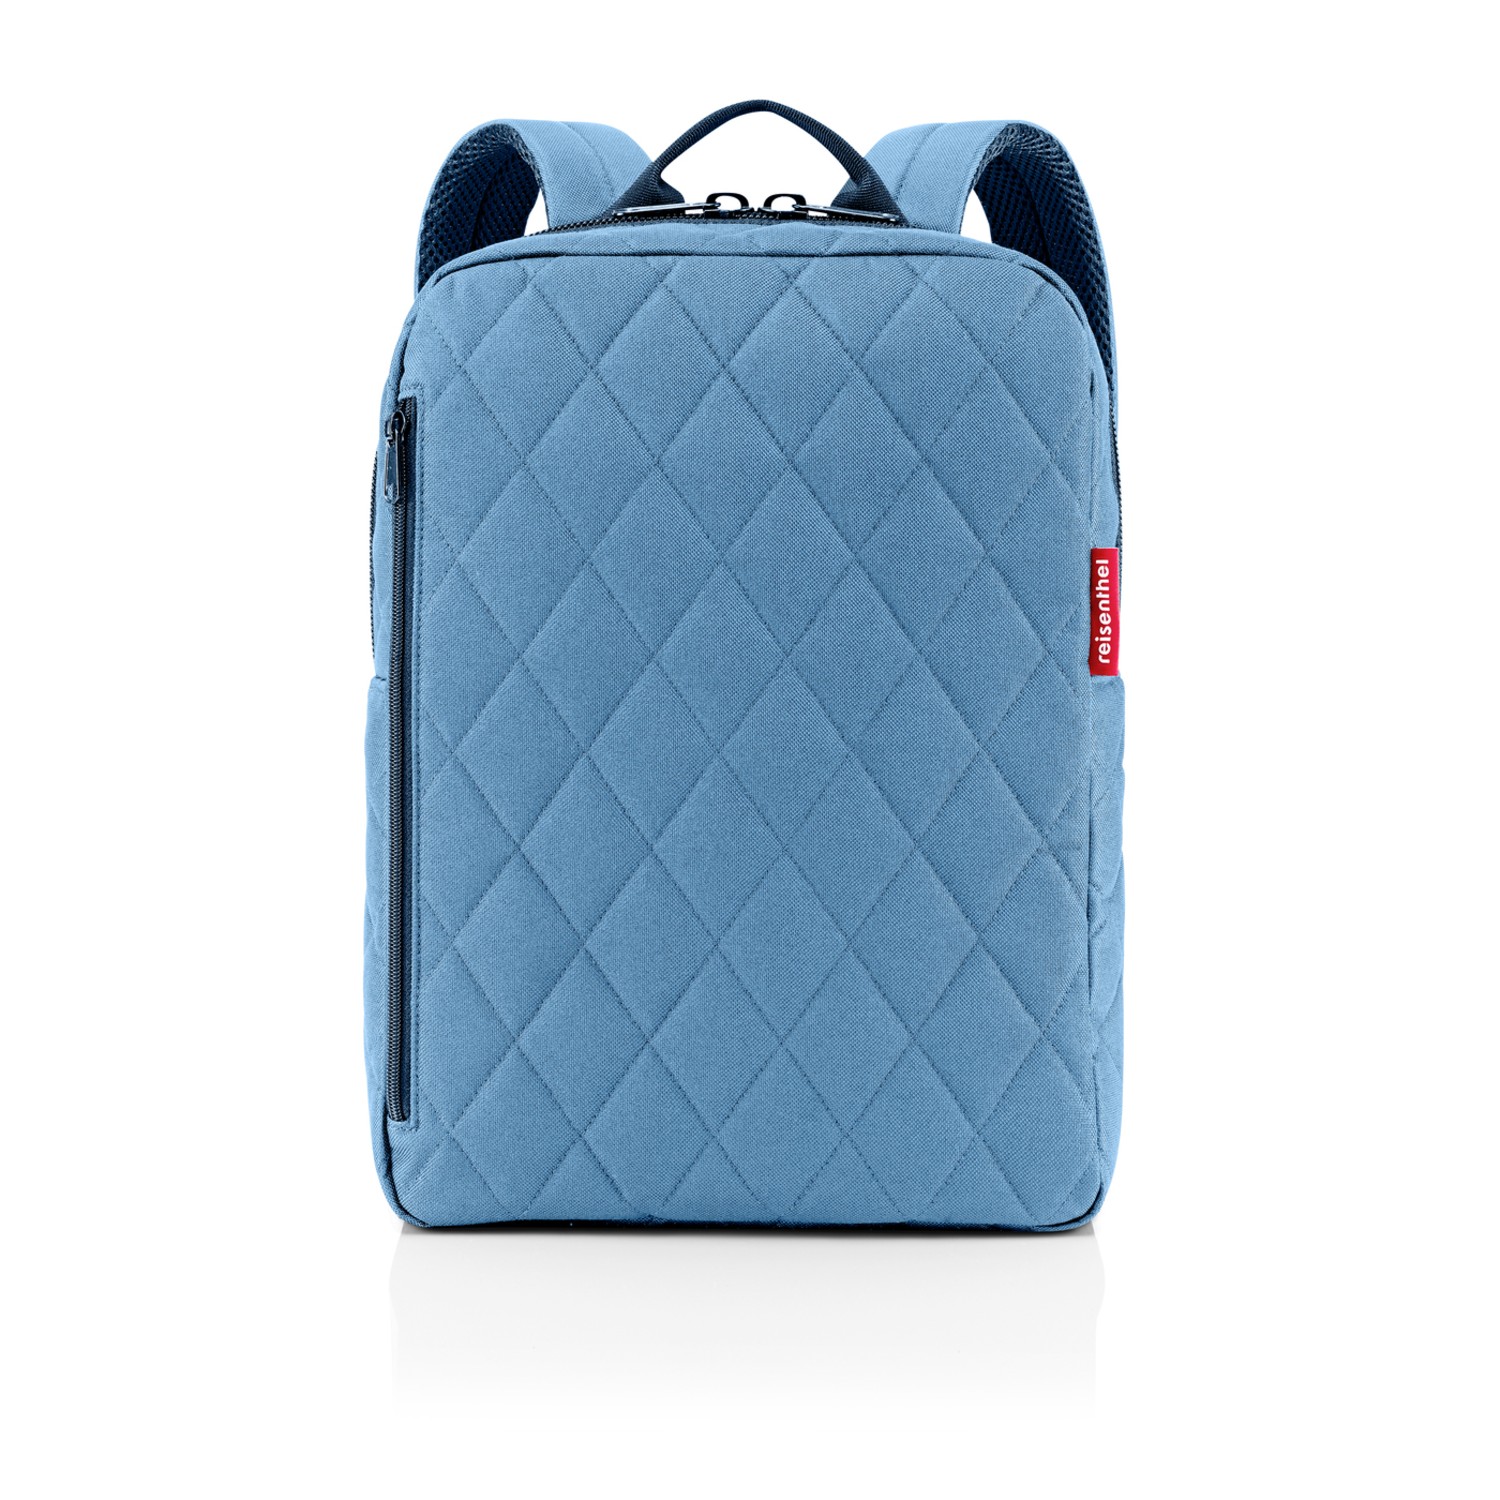 Reisenthel carrybag frame rhombus blue